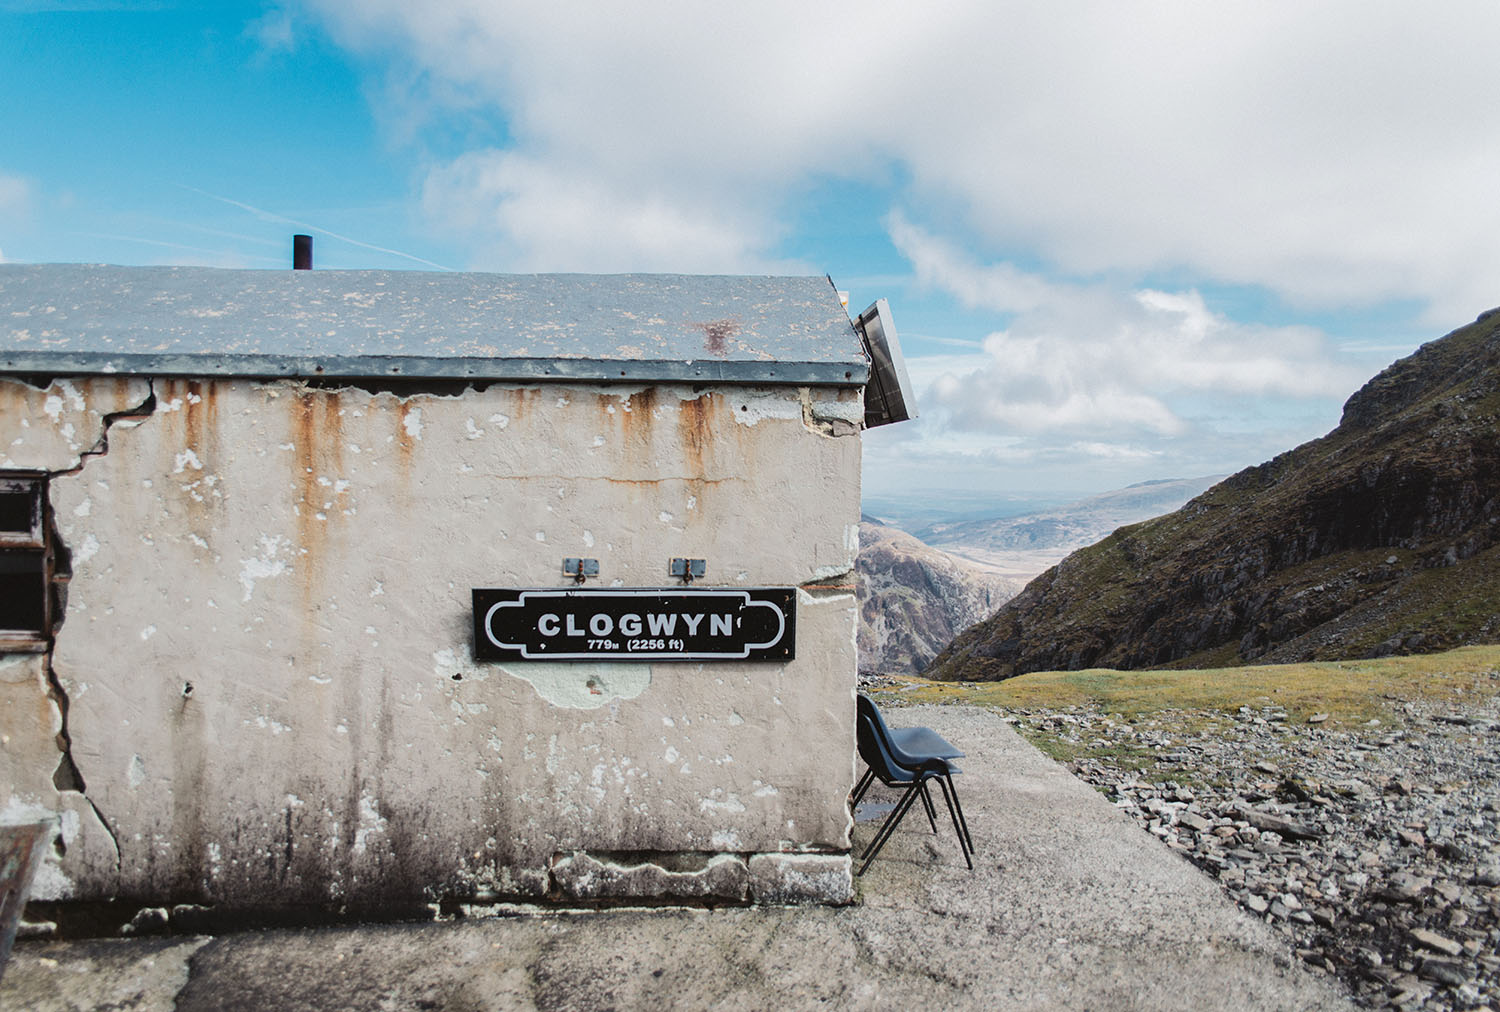 Clogwyn, Snowdon Mountain Railway in Snowdonia National Park, Wales